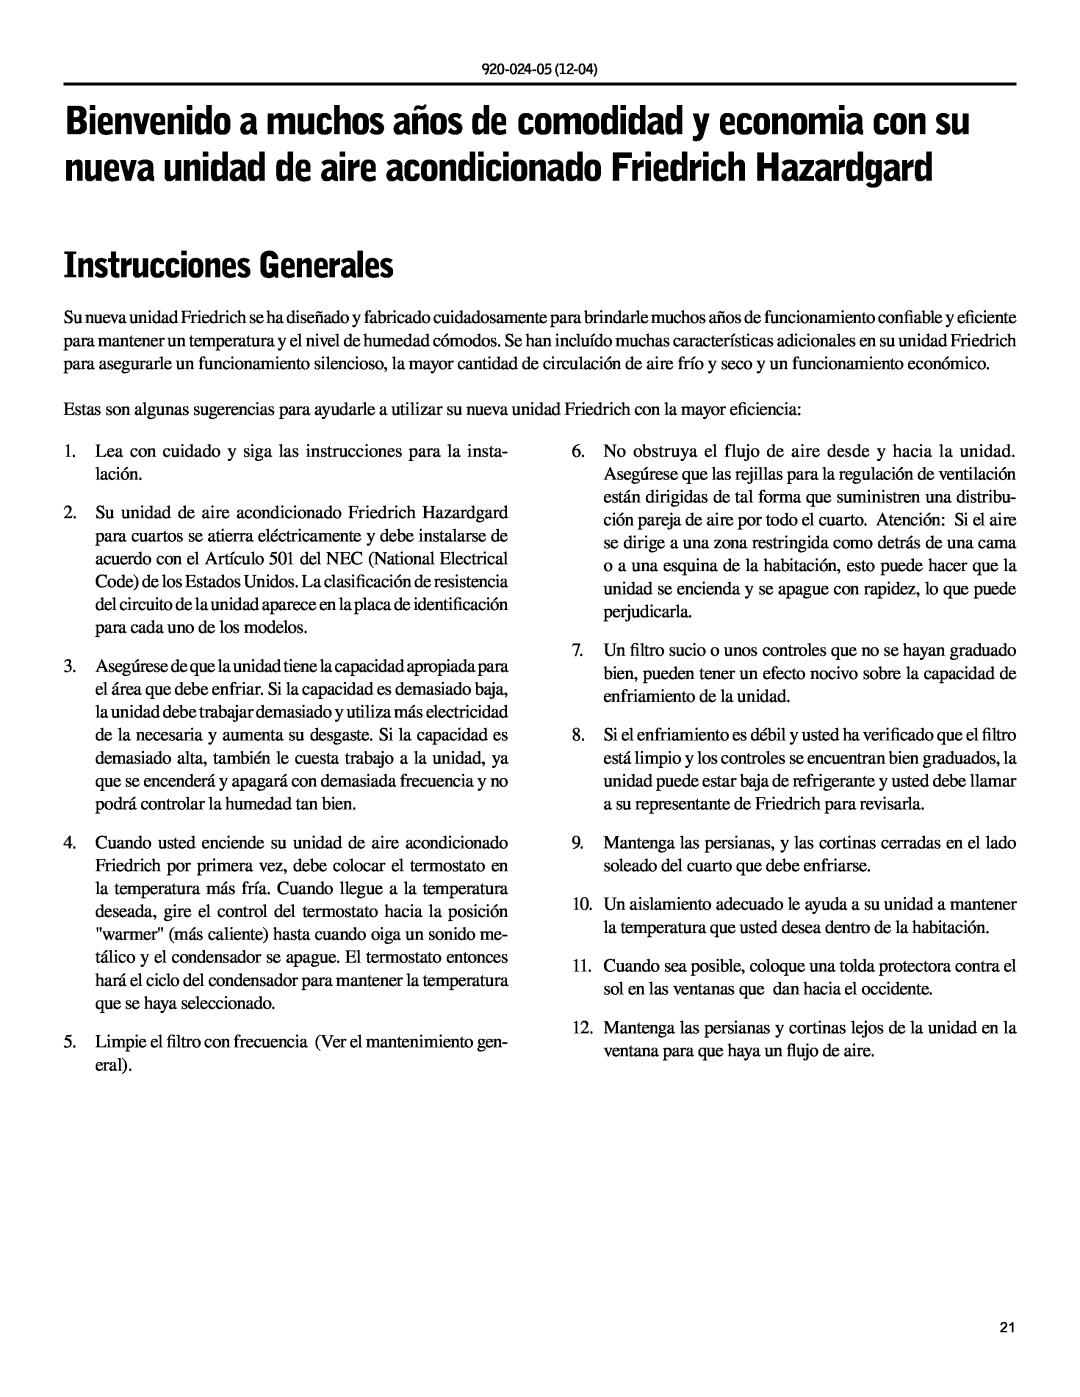 Friedrich SH20, SH15 operation manual Instrucciones Generales 